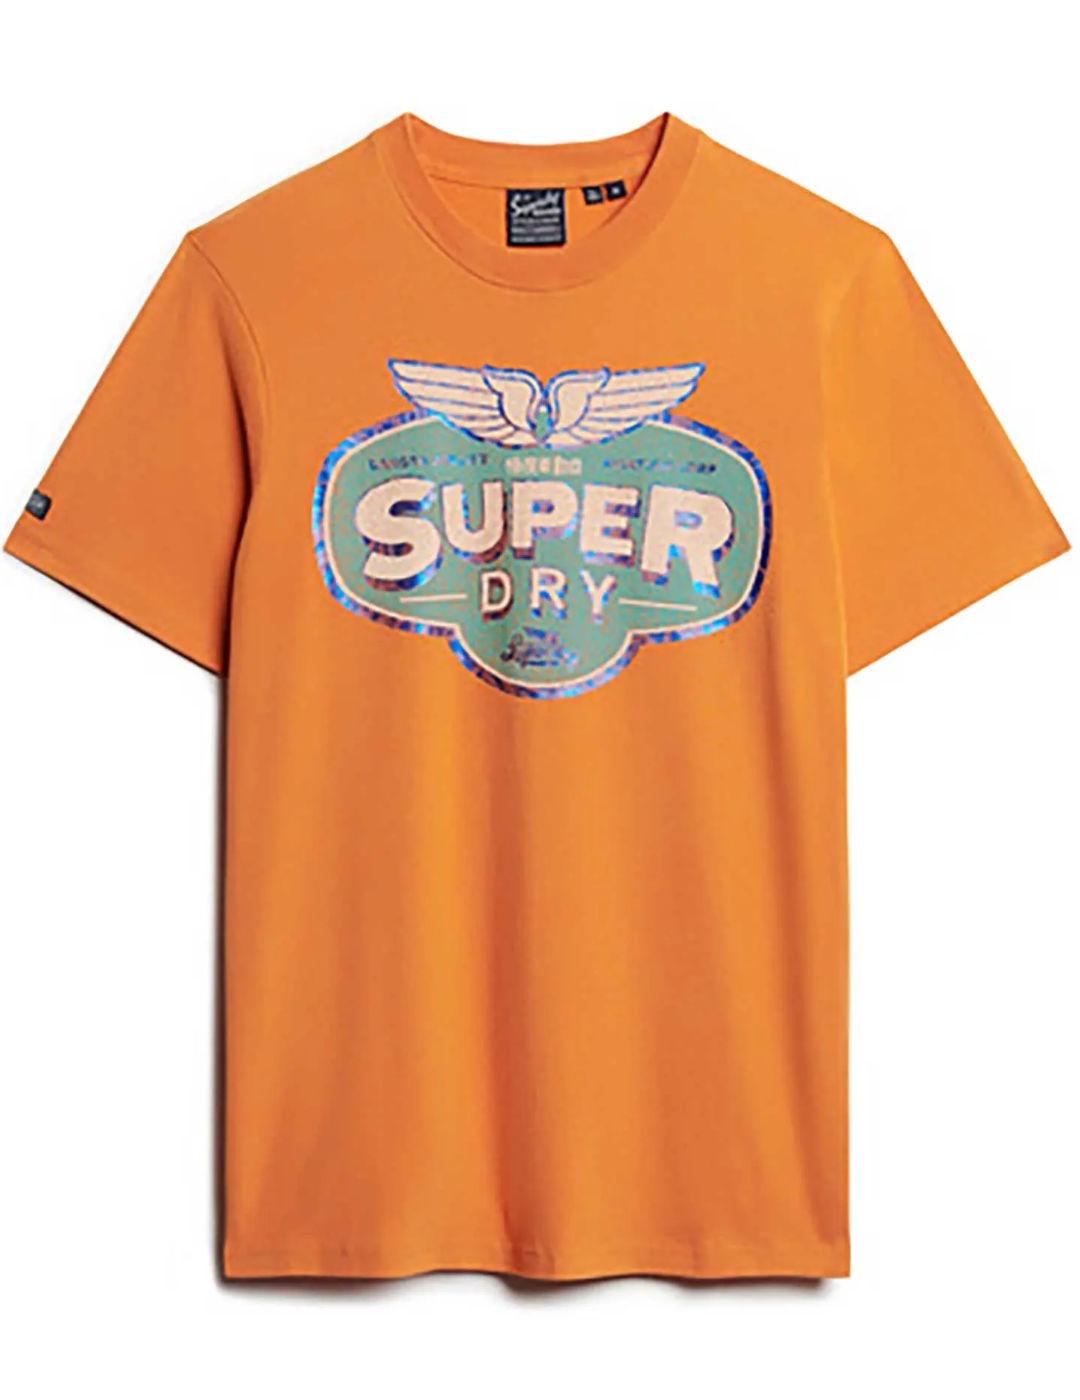 Camiseta Superdry Gasoline naranja manga corta para hombre